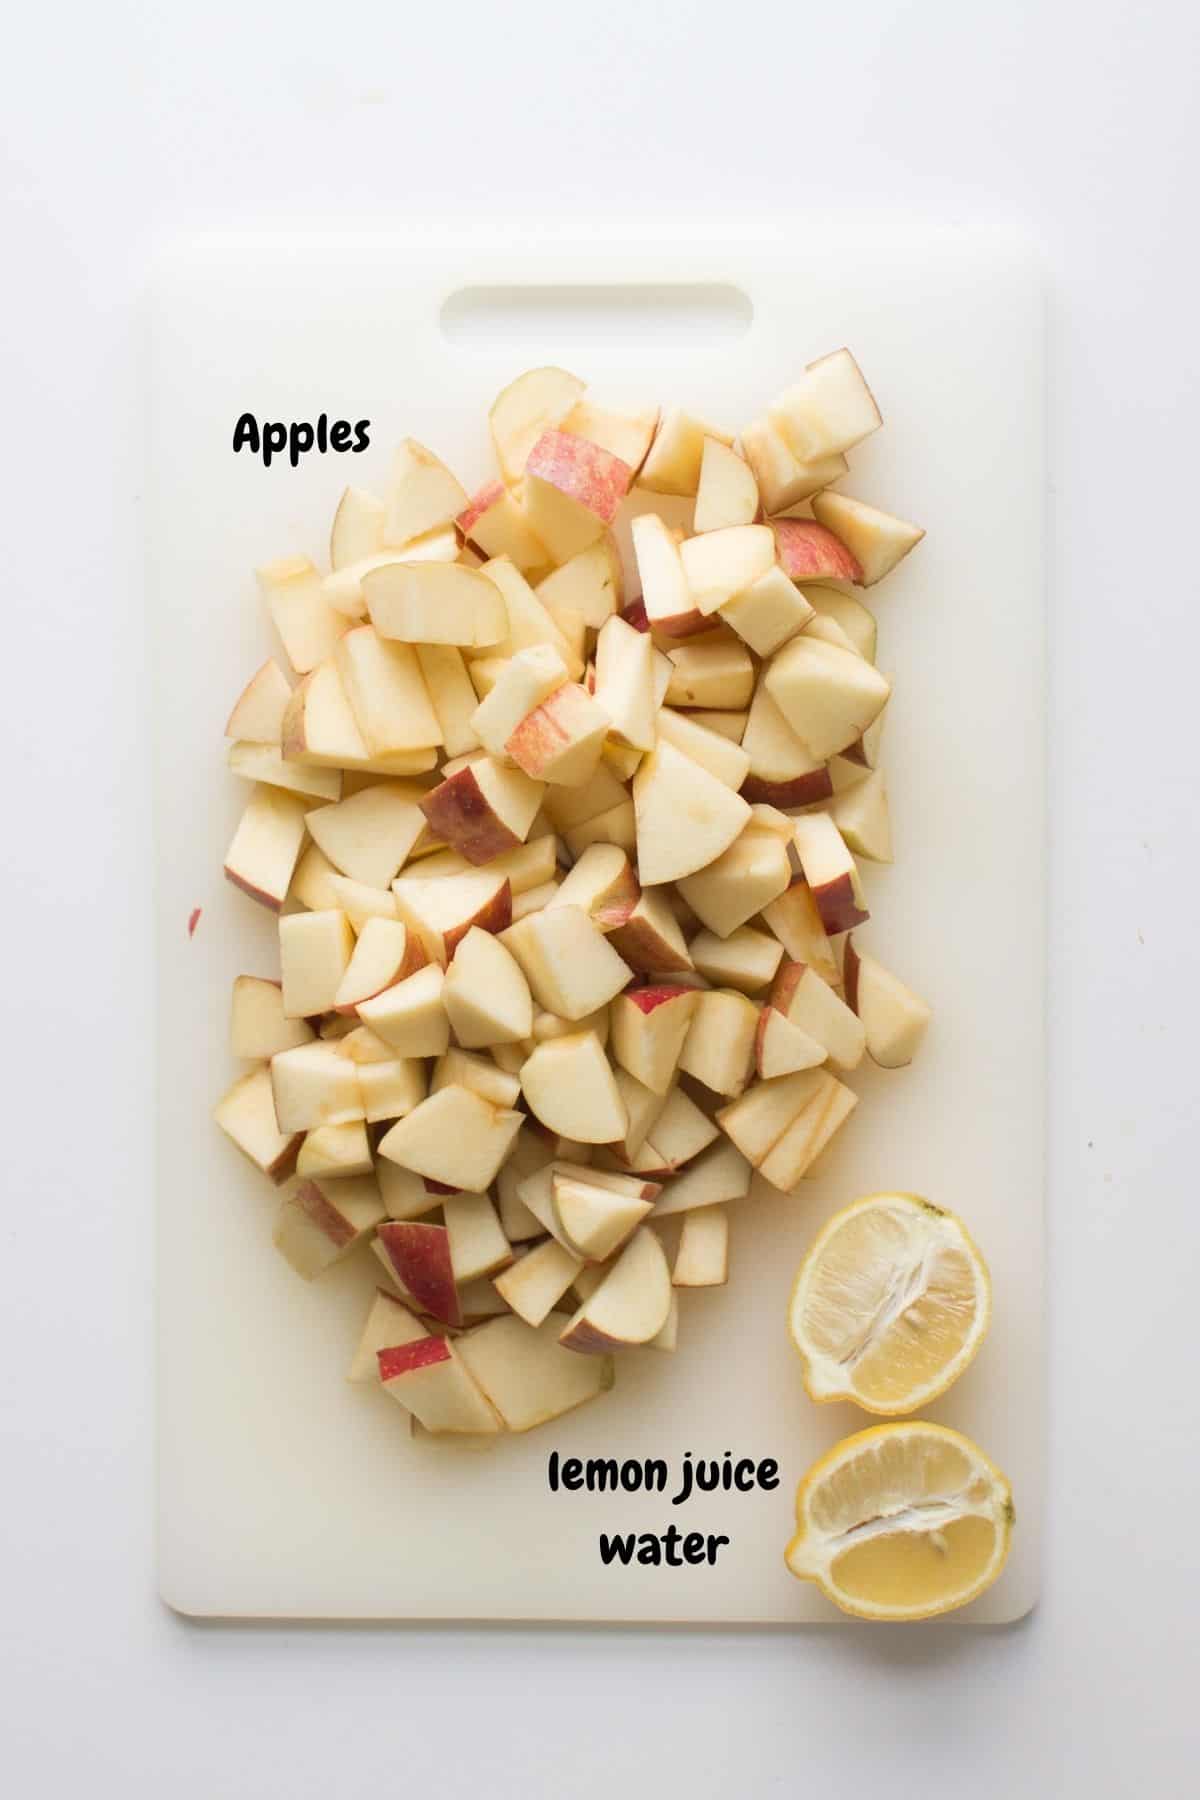 Chopped apples with sliced lemon.